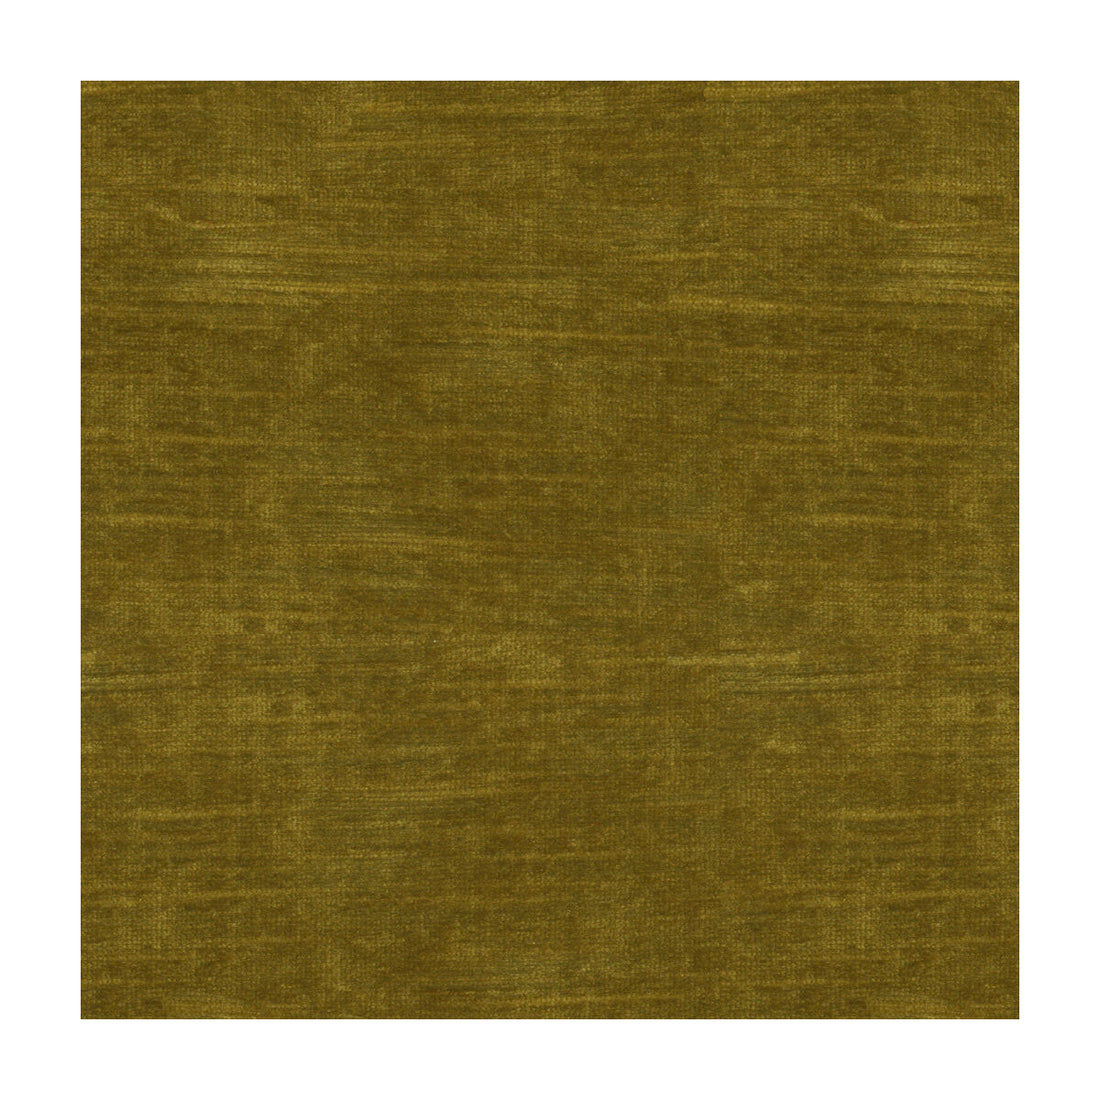 Lazare Velvet fabric in antique gold color - pattern 8016103.130.0 - by Brunschwig &amp; Fils